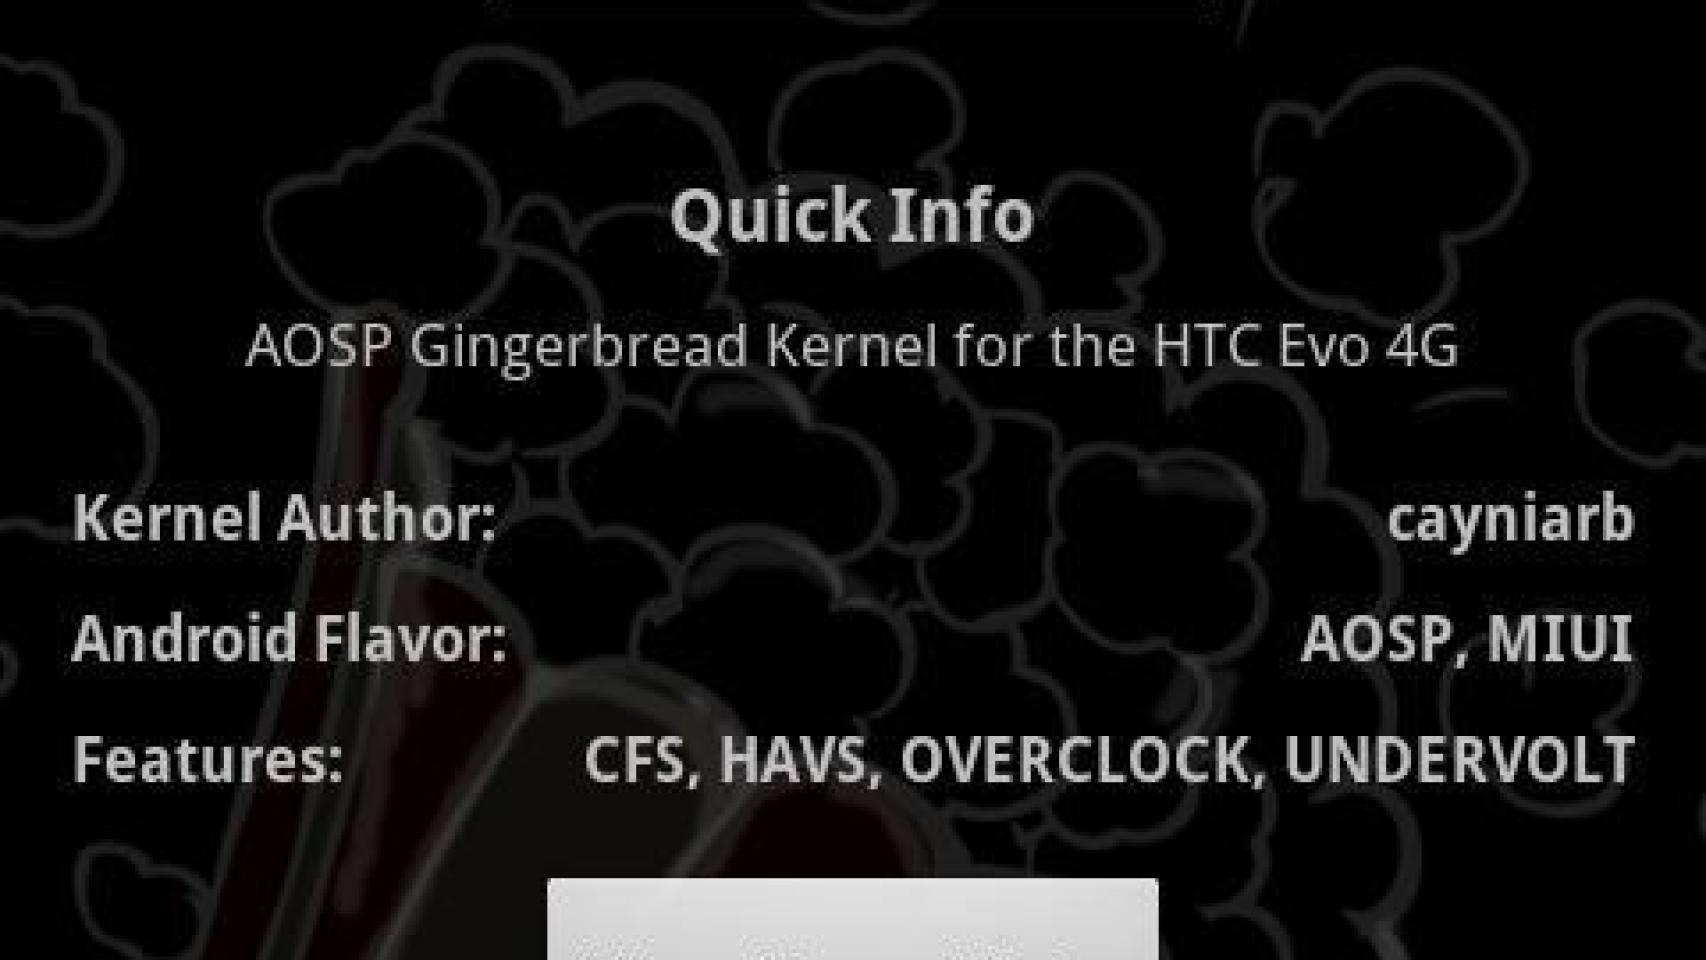 Kernel Manager, descarga e instala Kernels para tu Android en un click